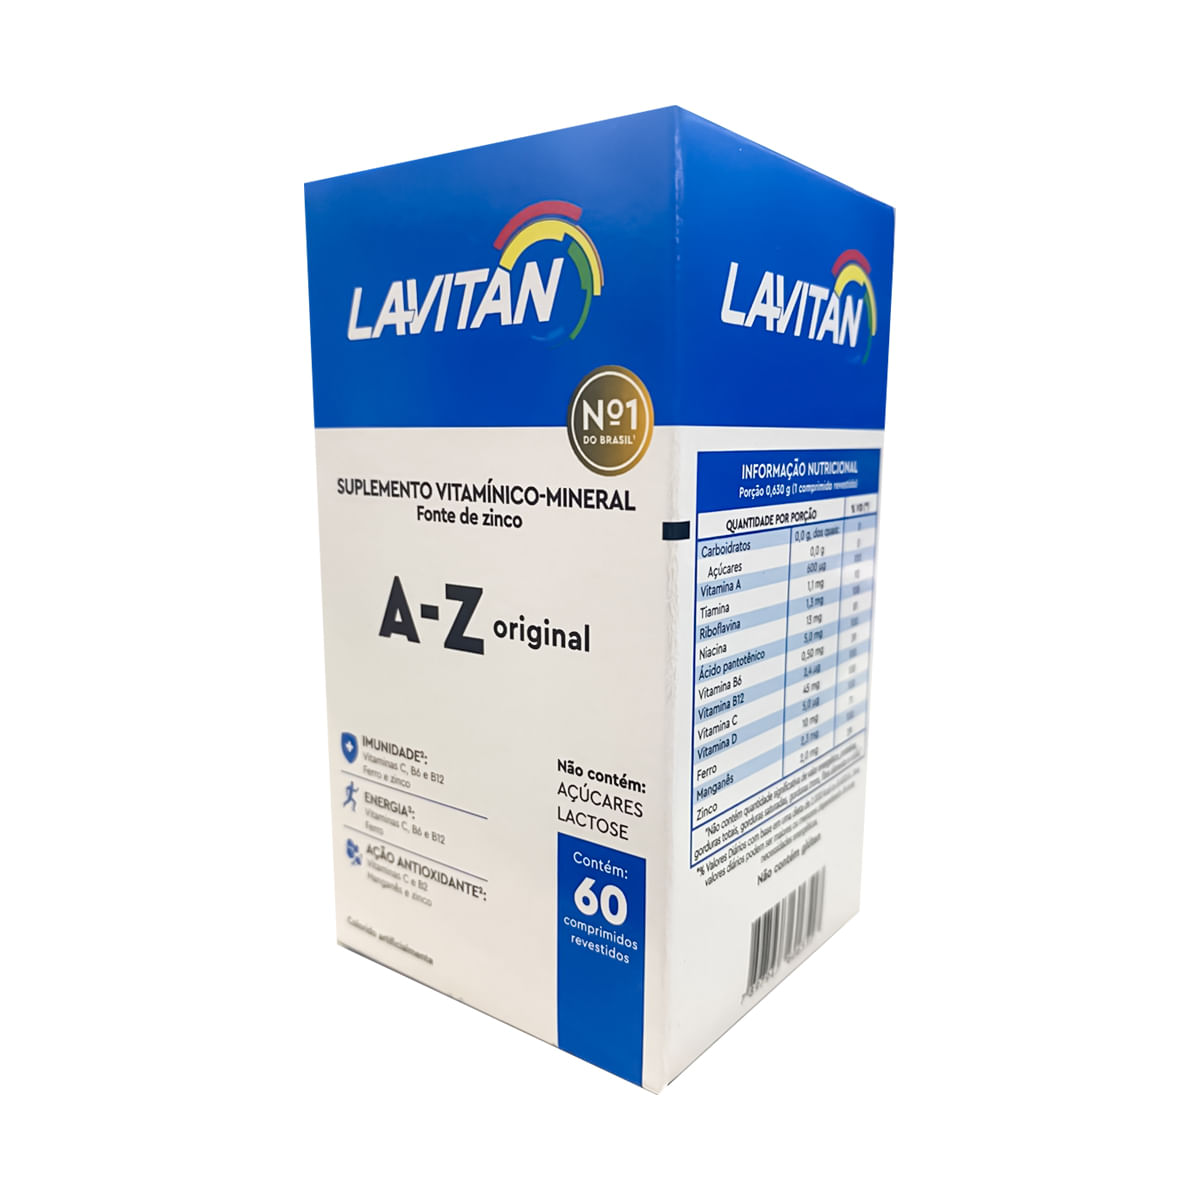 Lavitan Vitaminas A-Z Original Suplemento Vitamínico Mineral com 60 Comprimidos Cimed